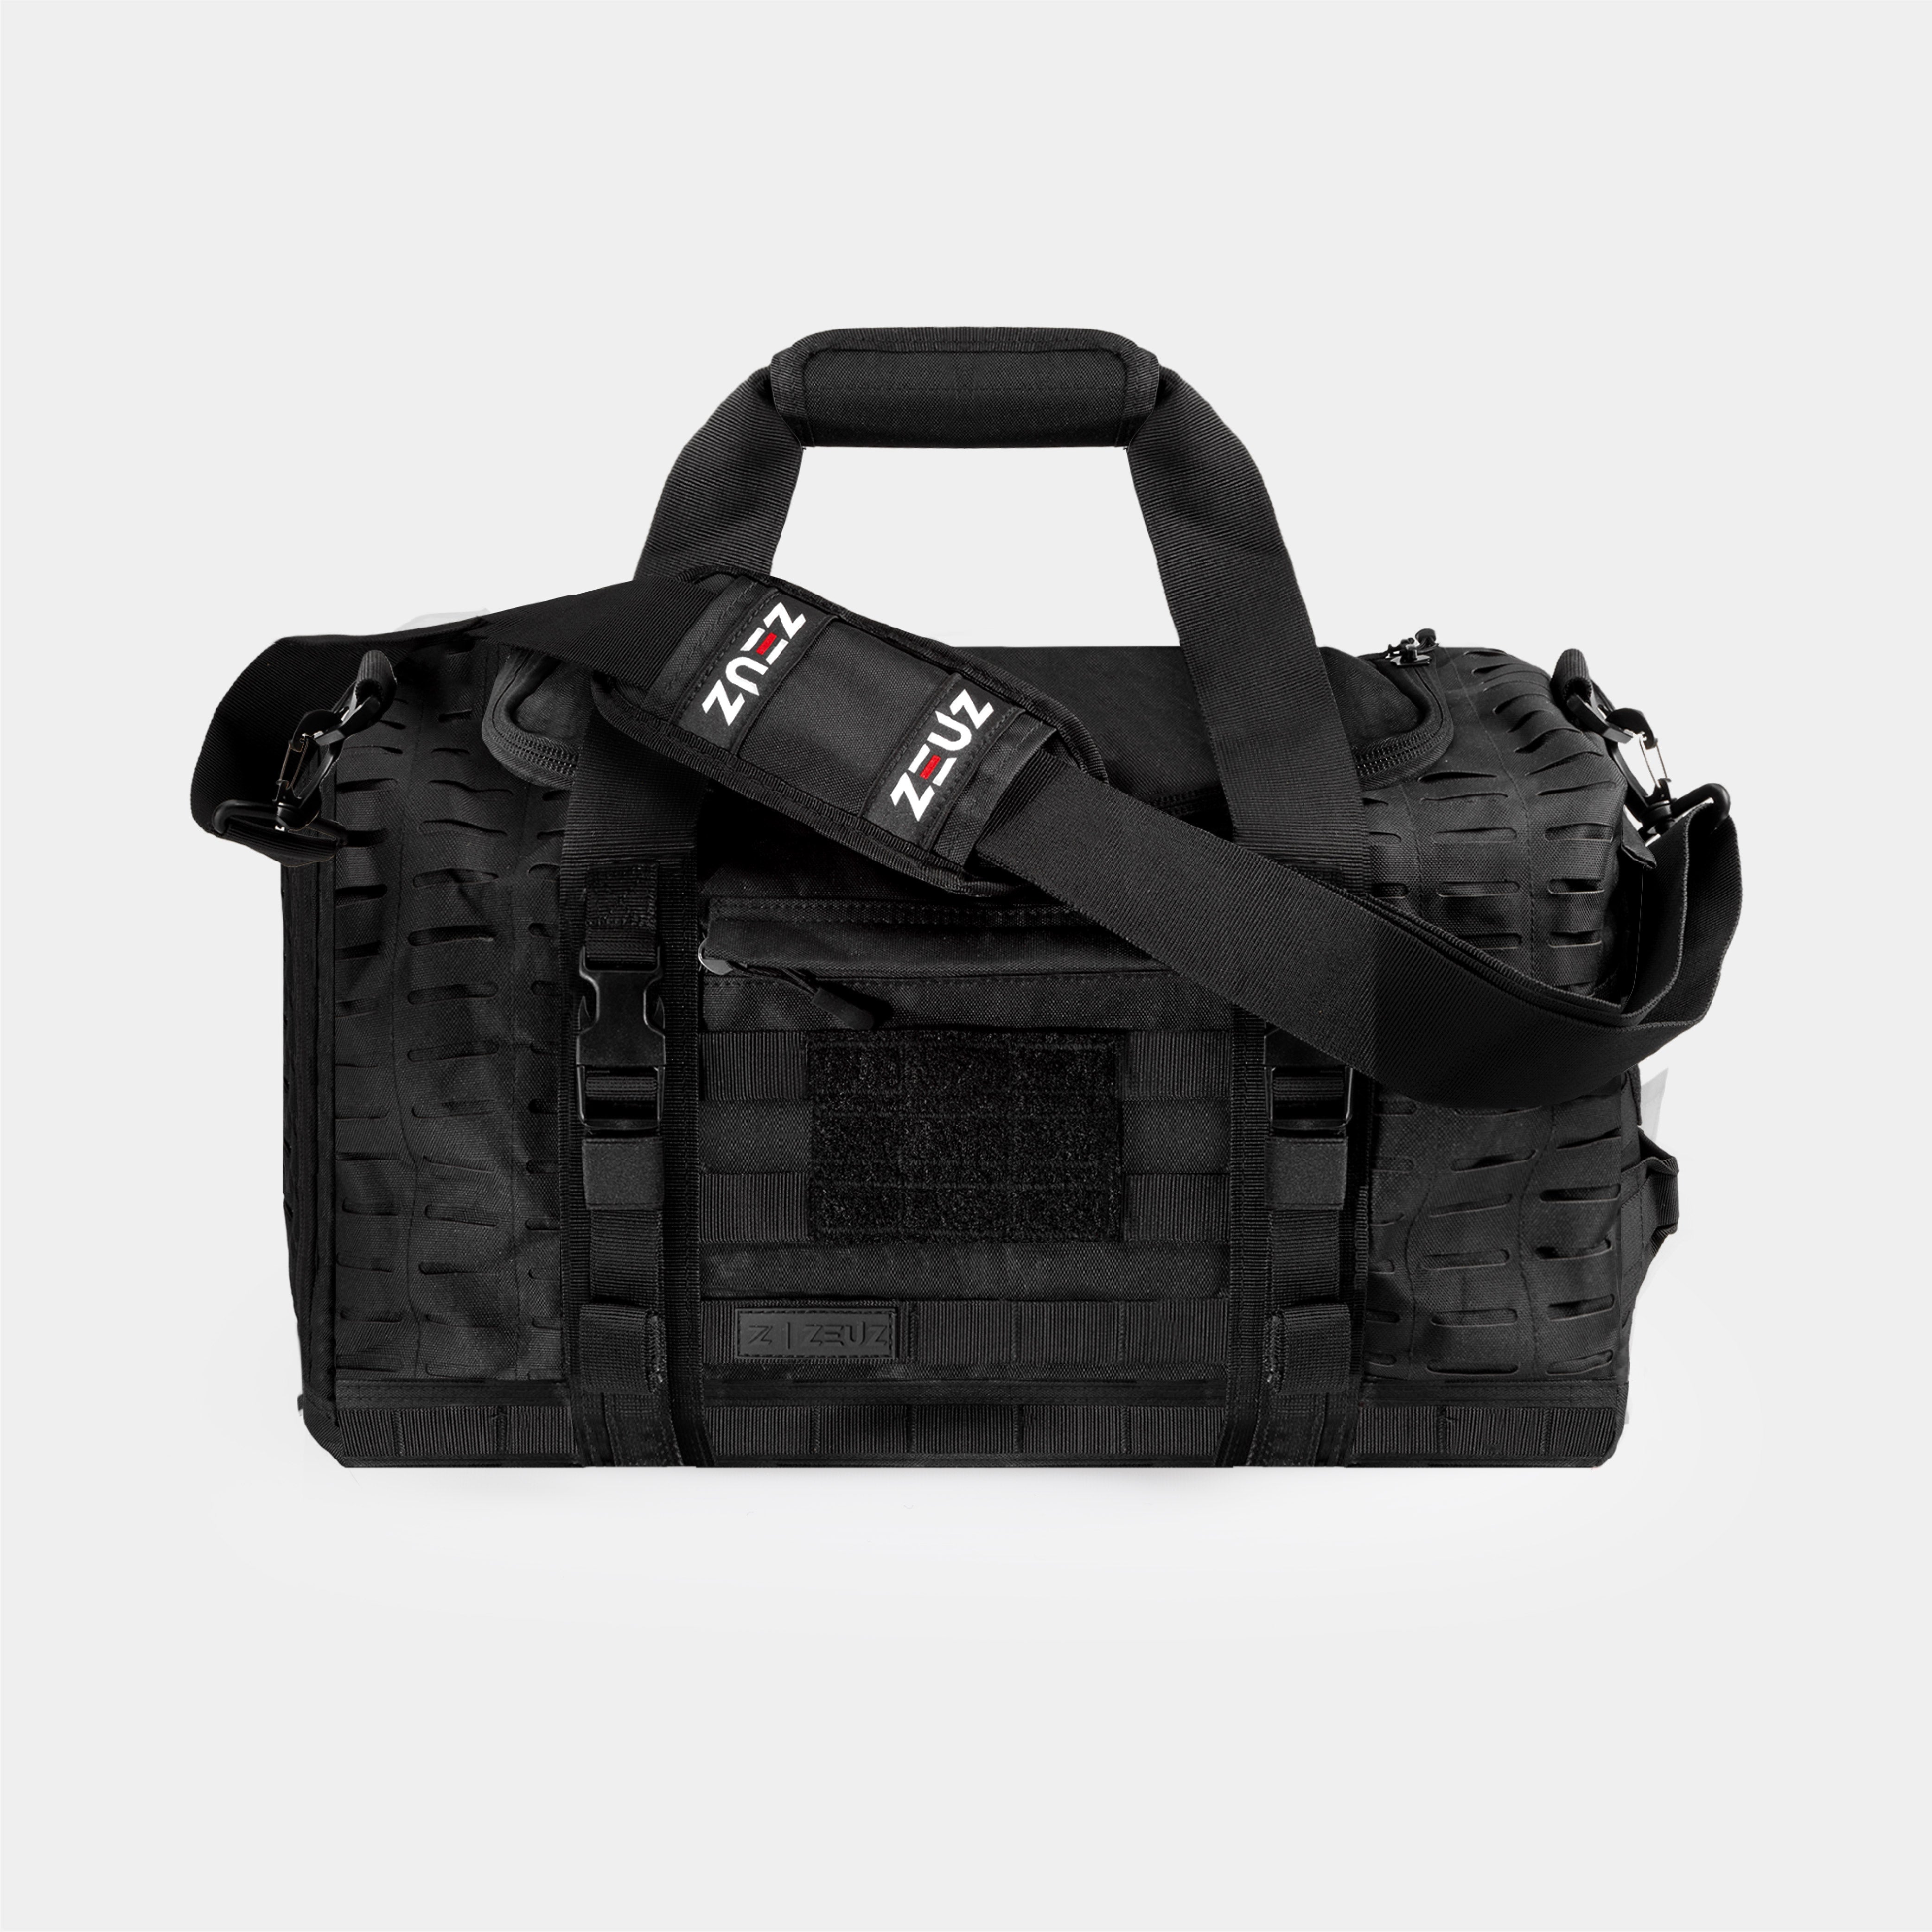 ZEUZ Sports Bag - Fitness Duffel Bag